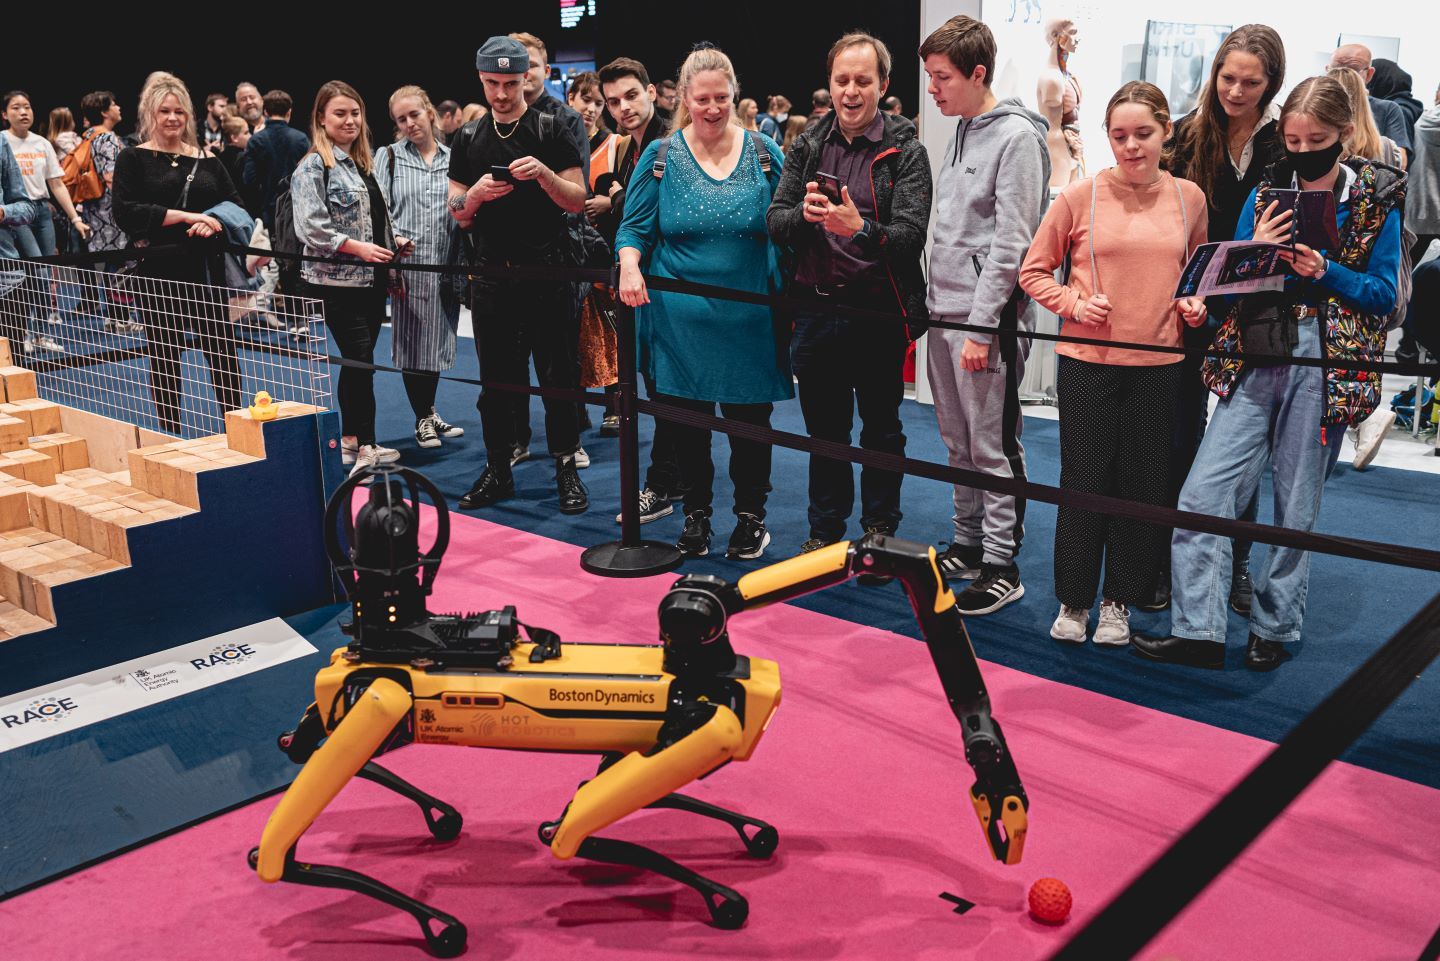 SPOT the robotic dog